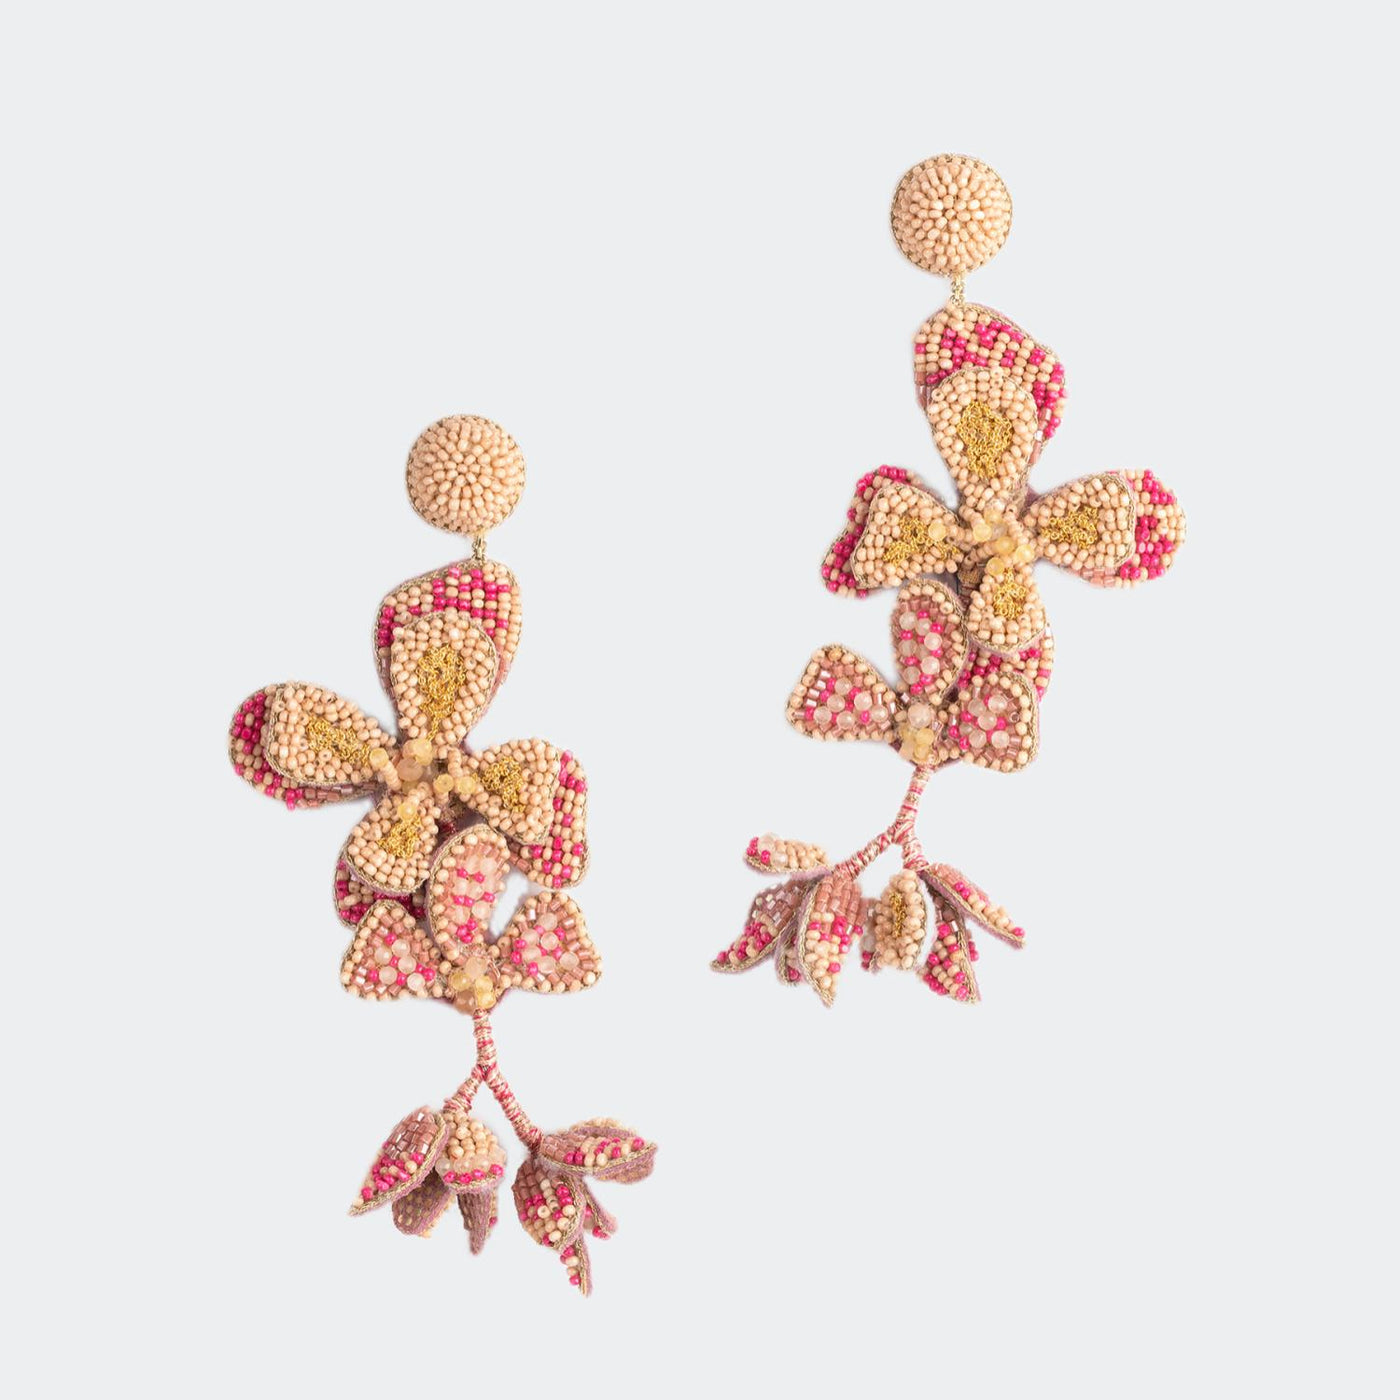 DEEPA GURNANI Pink Bluebell Earring handcrafted using glass beads